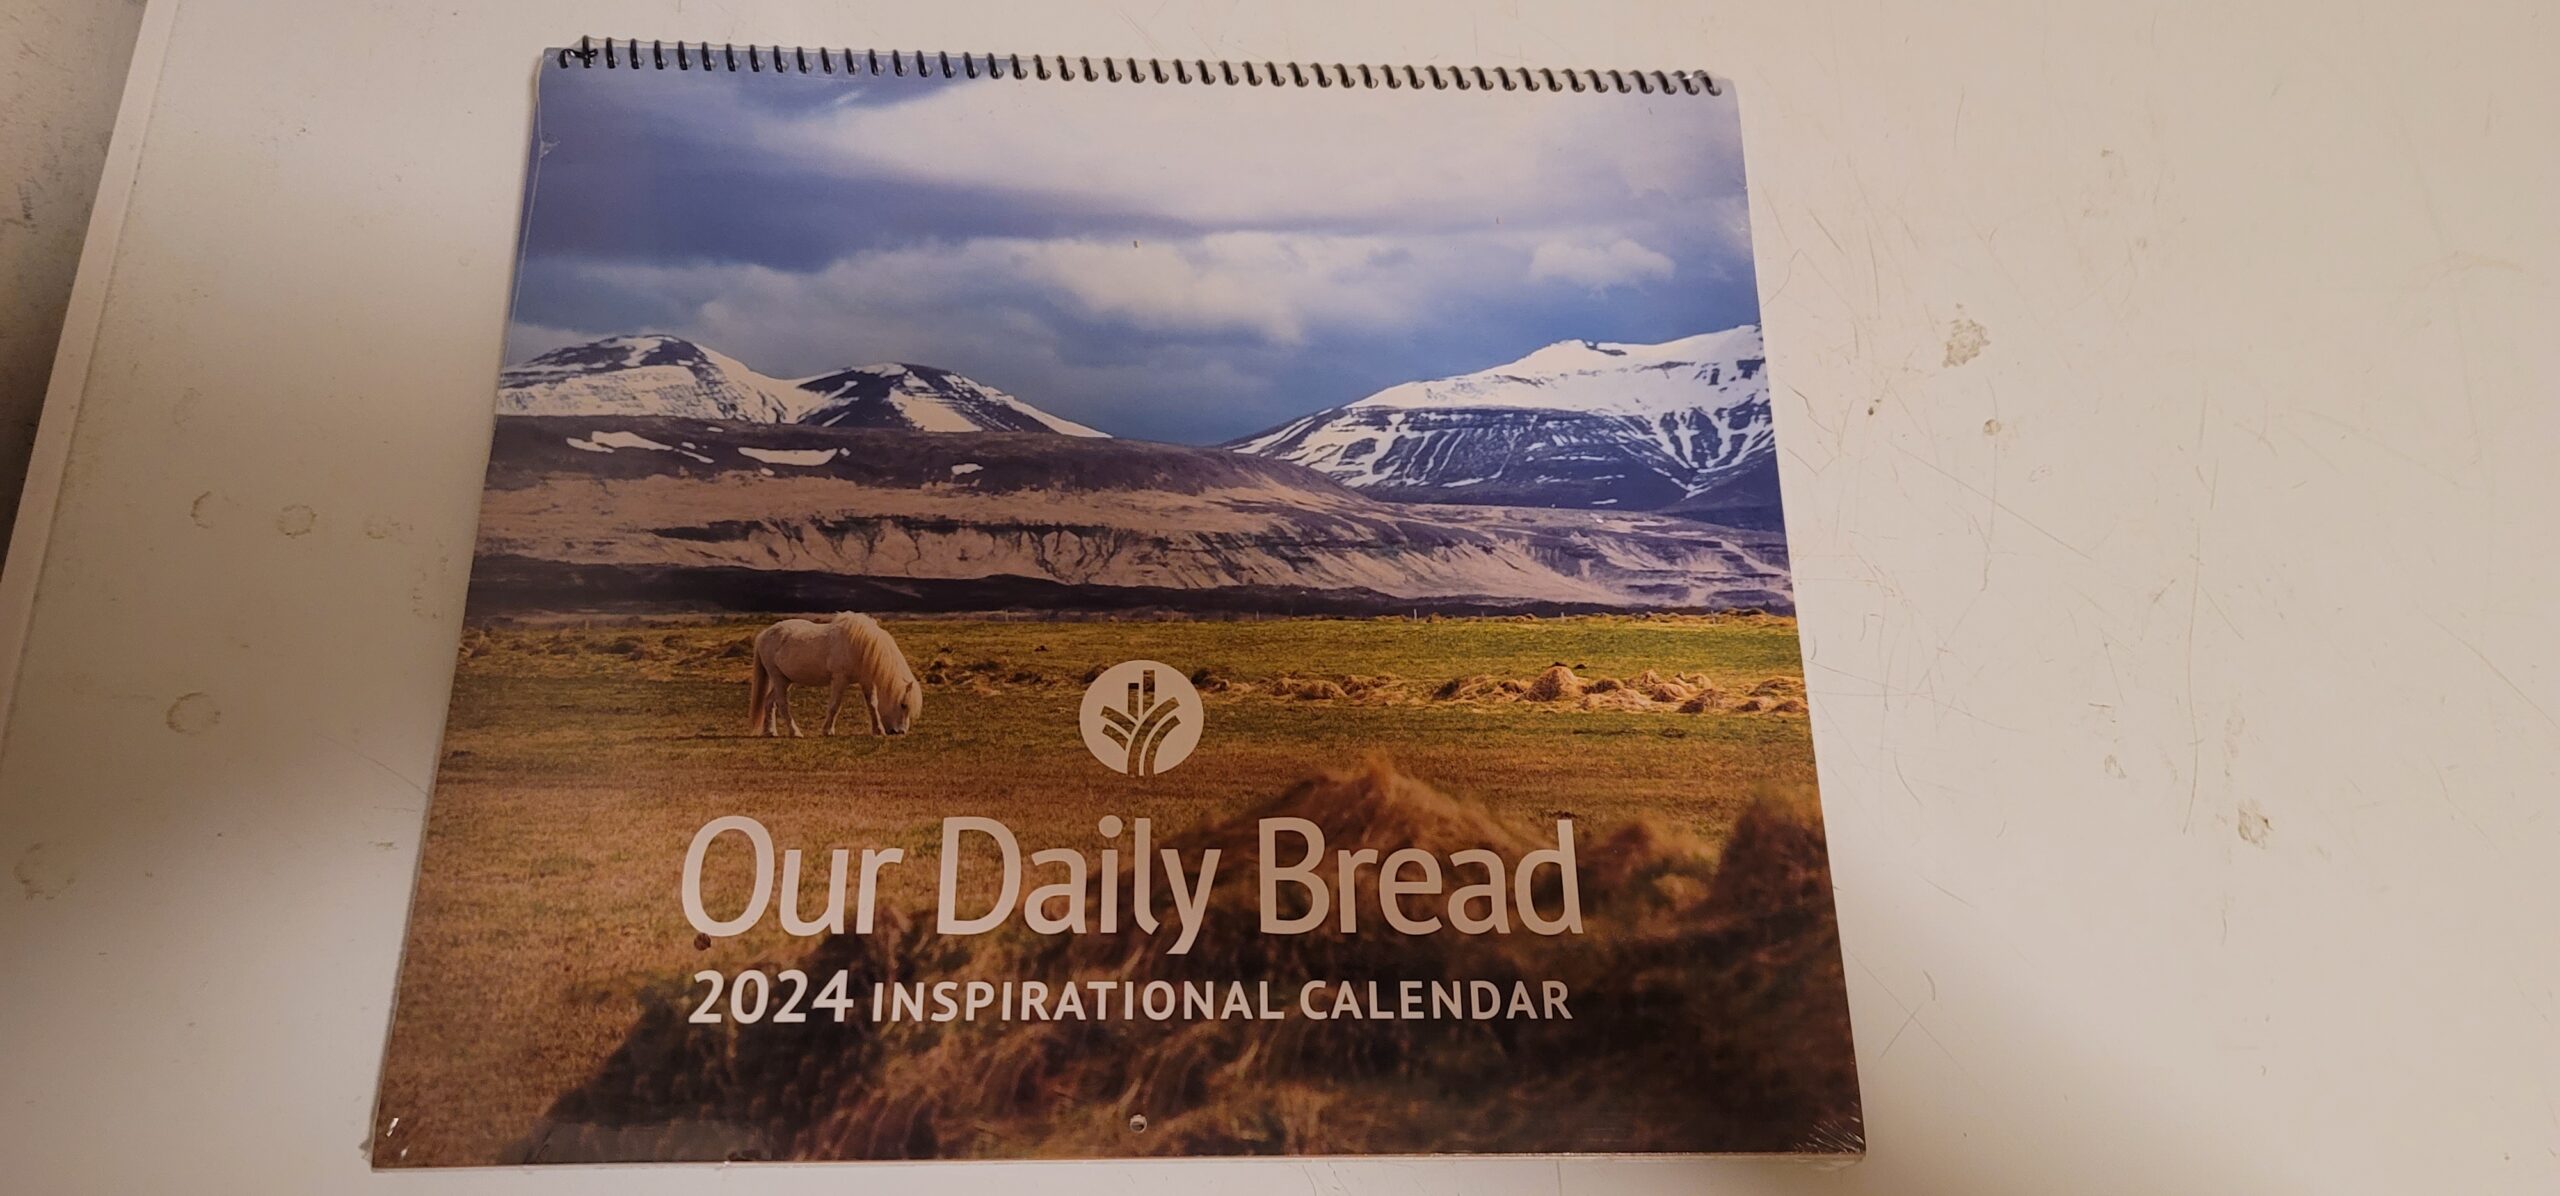 FREE Our Daily Bread 2024 Wall Calendar! MWFreebies